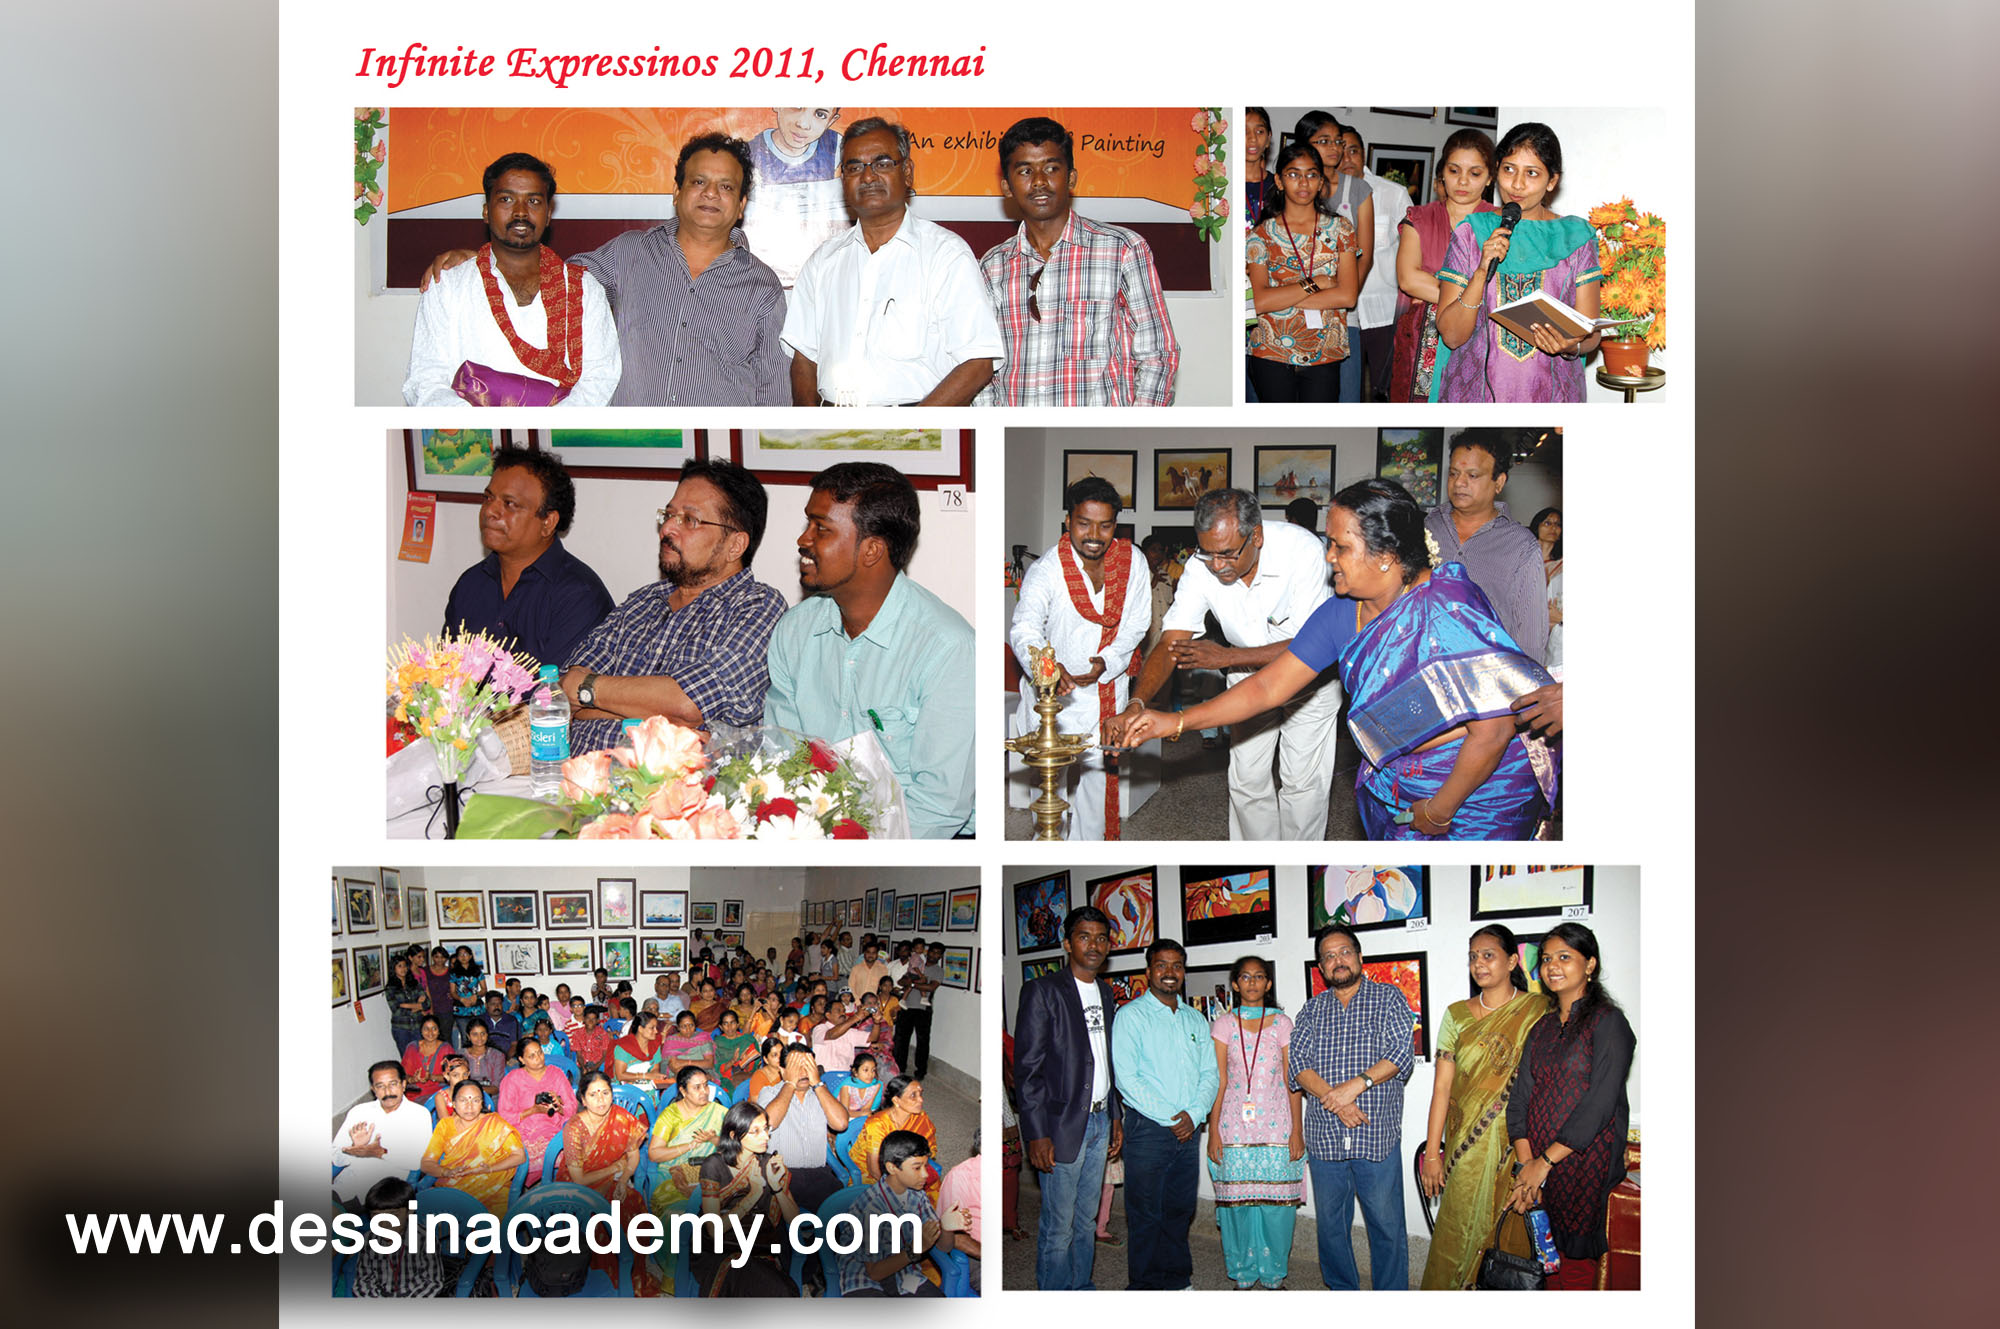 Dessin School of arts Event Gallery 5, Painting classes in Bangalore, Surya CityDessin School of Arts